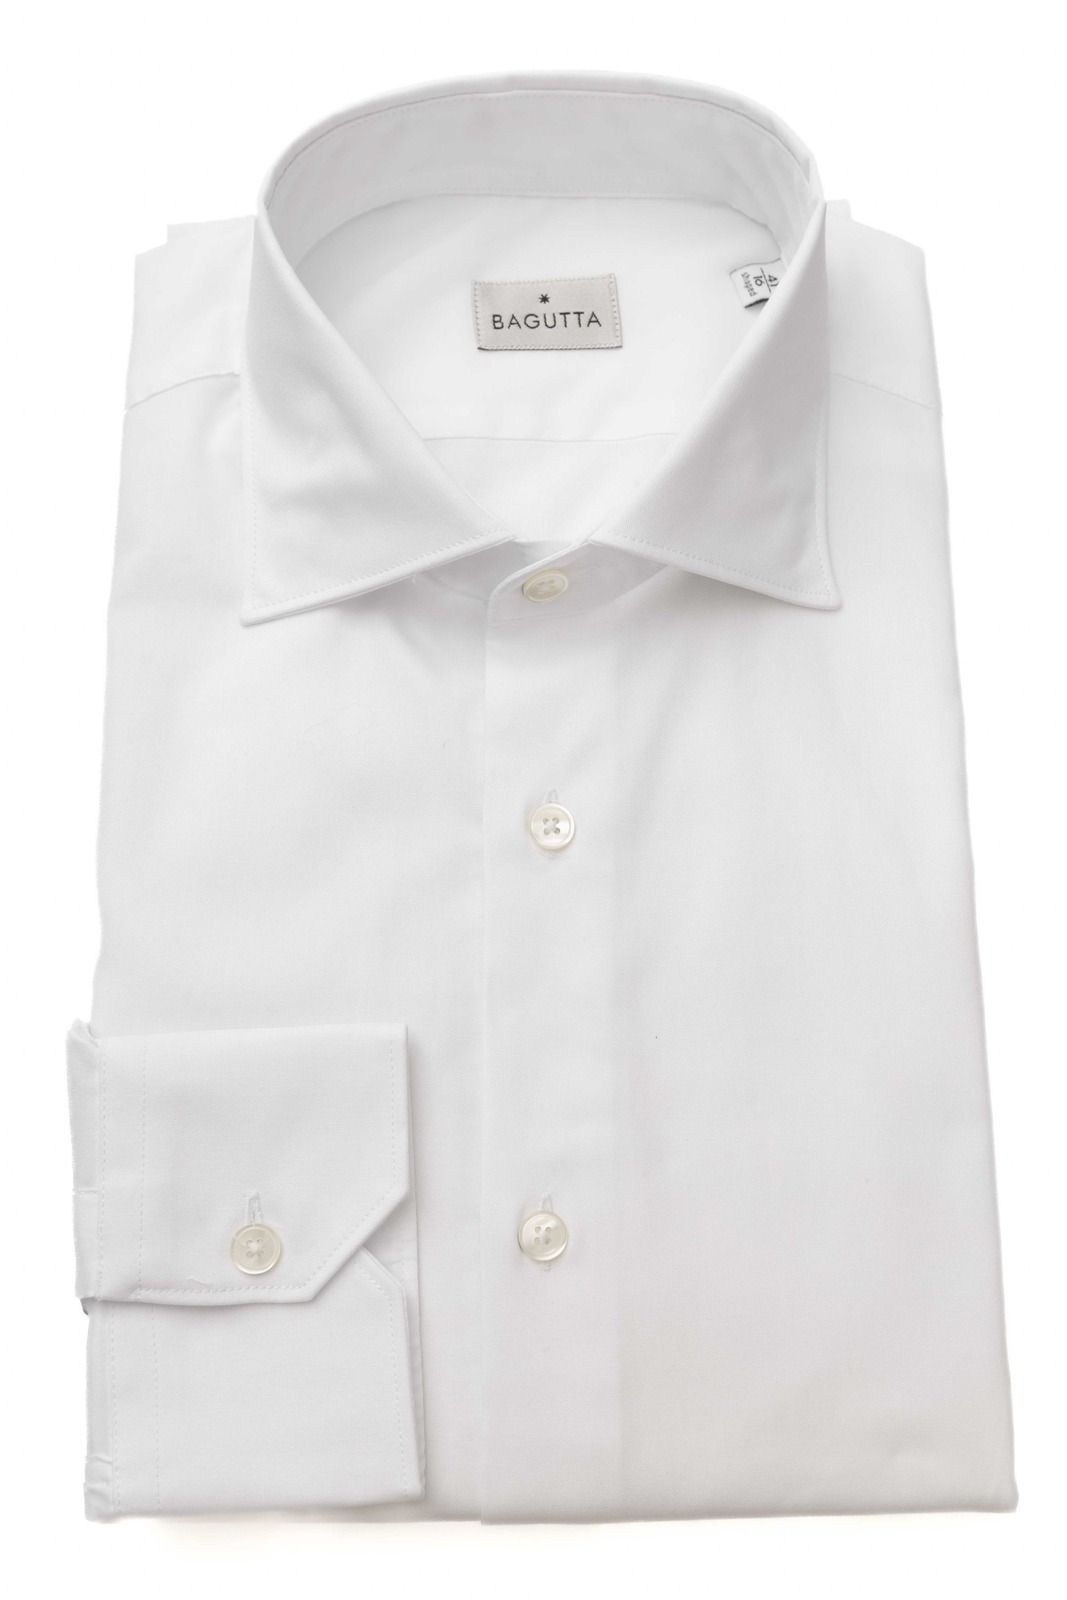 Košile Bagutta 12509 MIAMI Barva: bílá, Velikost: 40